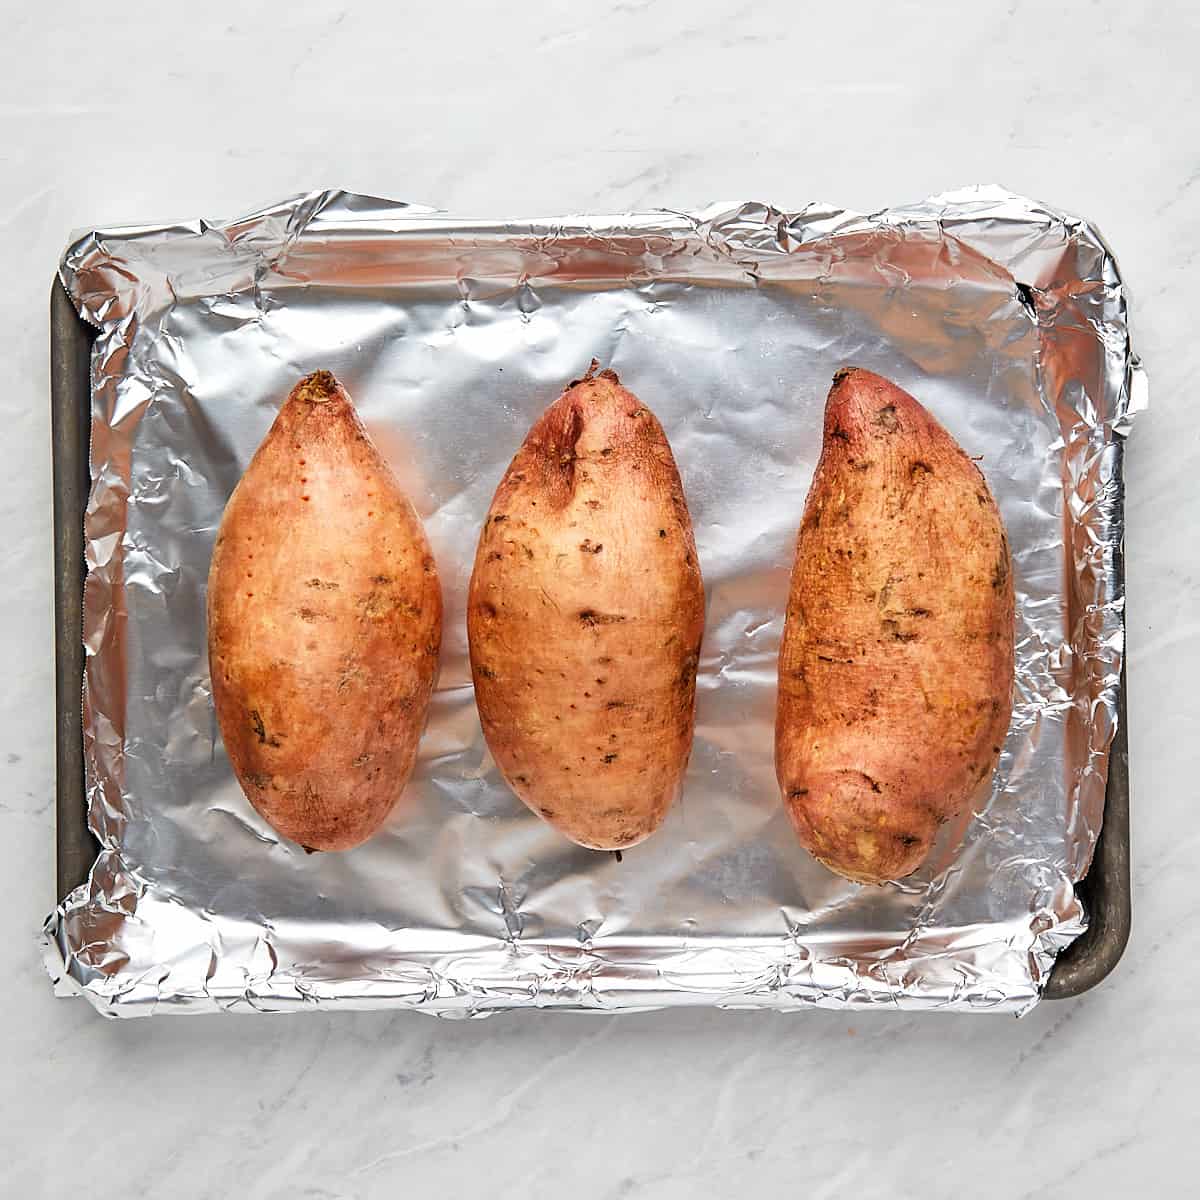 sweet potatoes on a cookie sheet